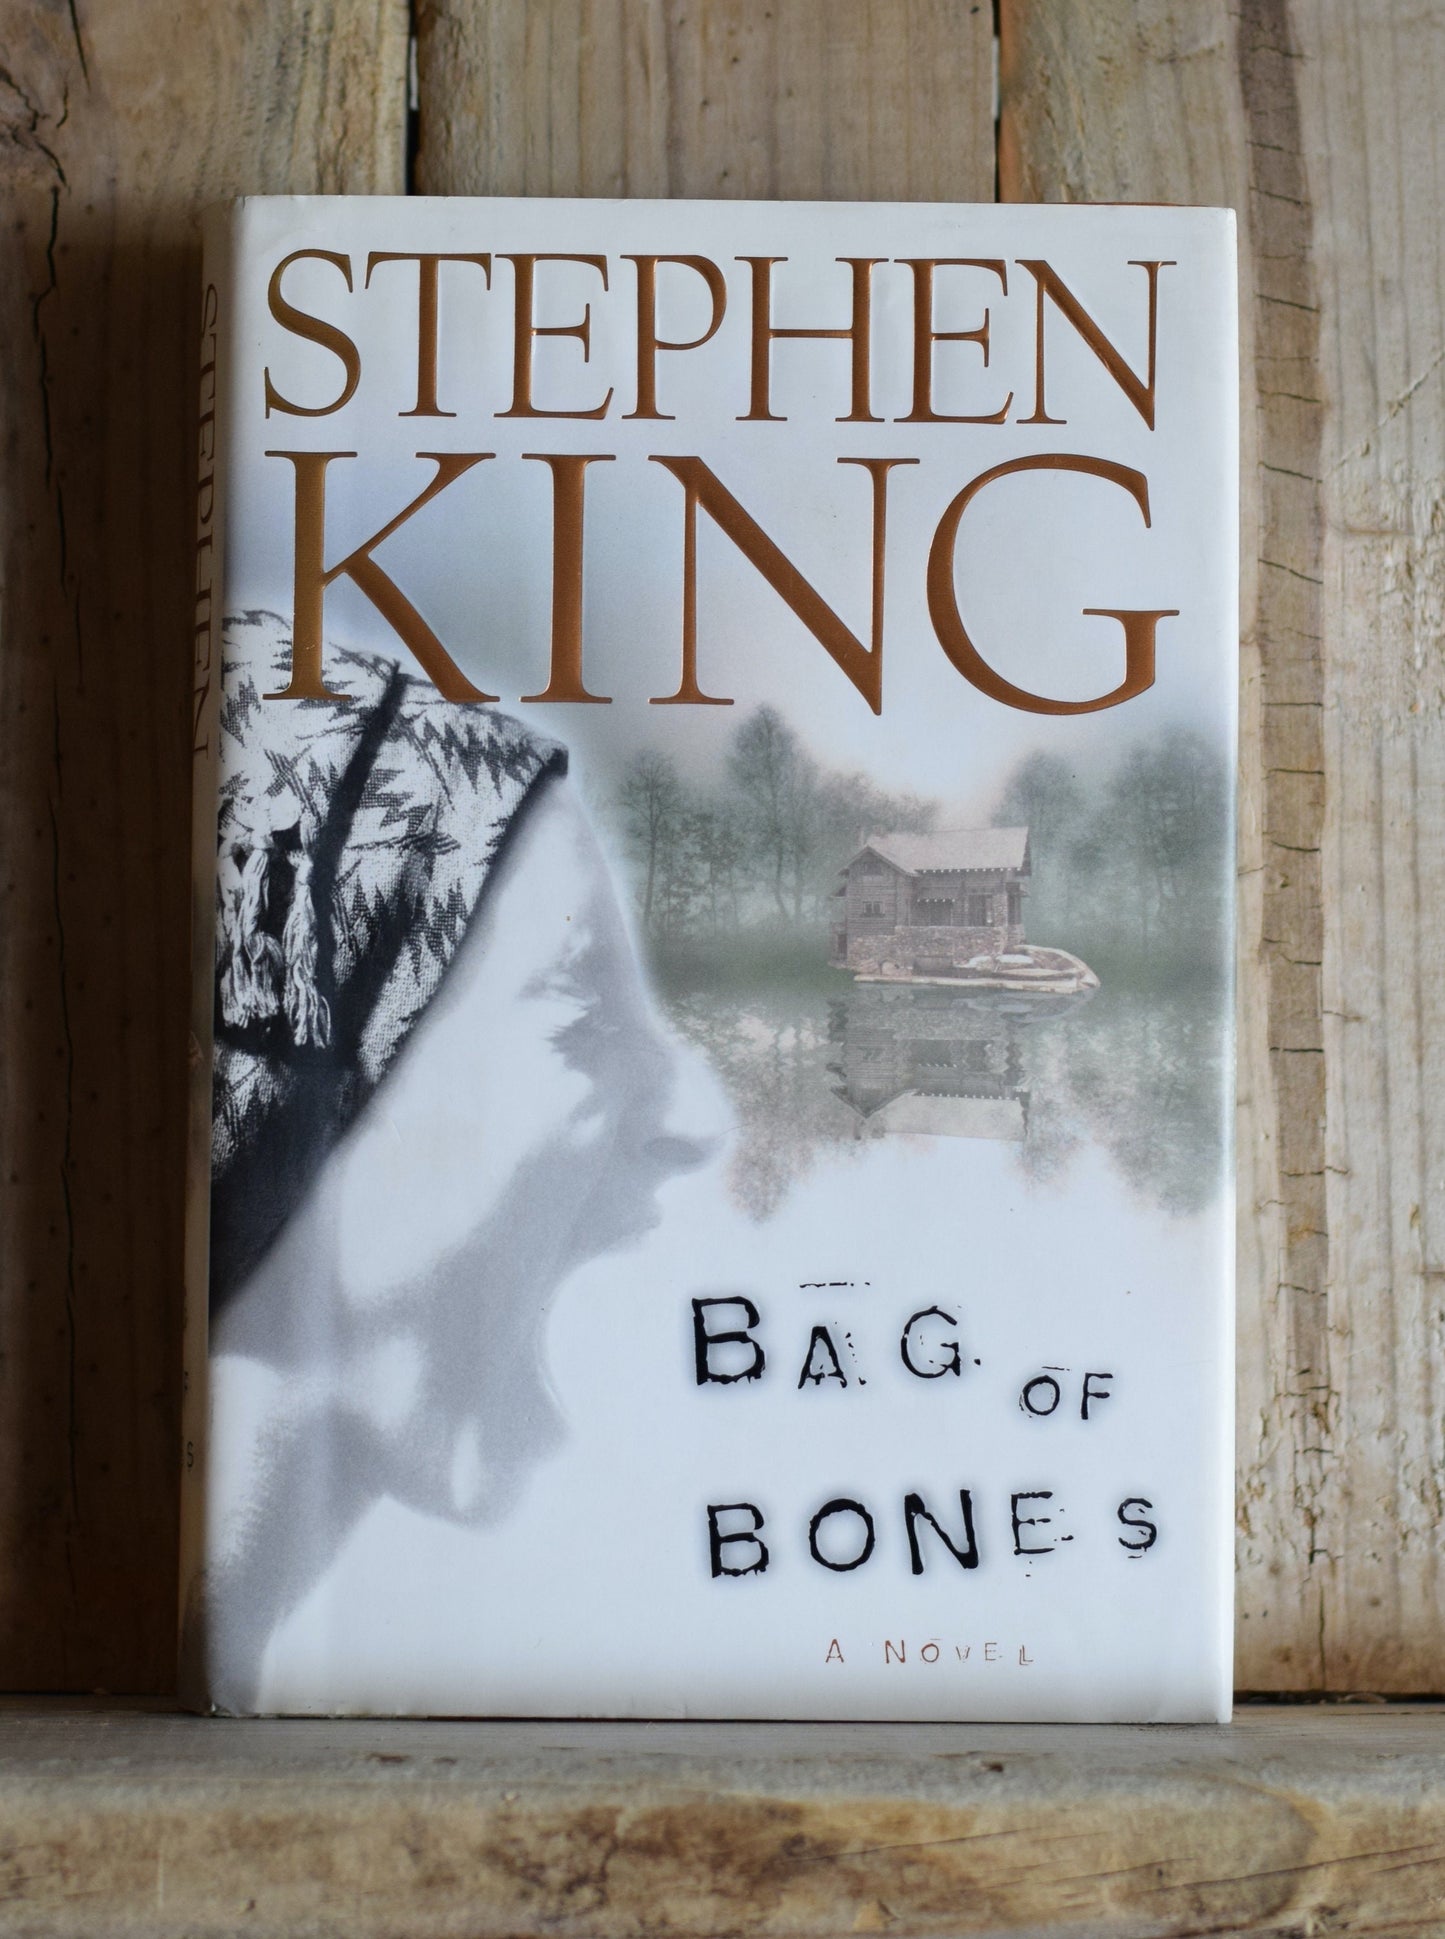 Vintage Horror Hardback: Stephen King - Bag of Bones FIRST EDITION/PRINTING